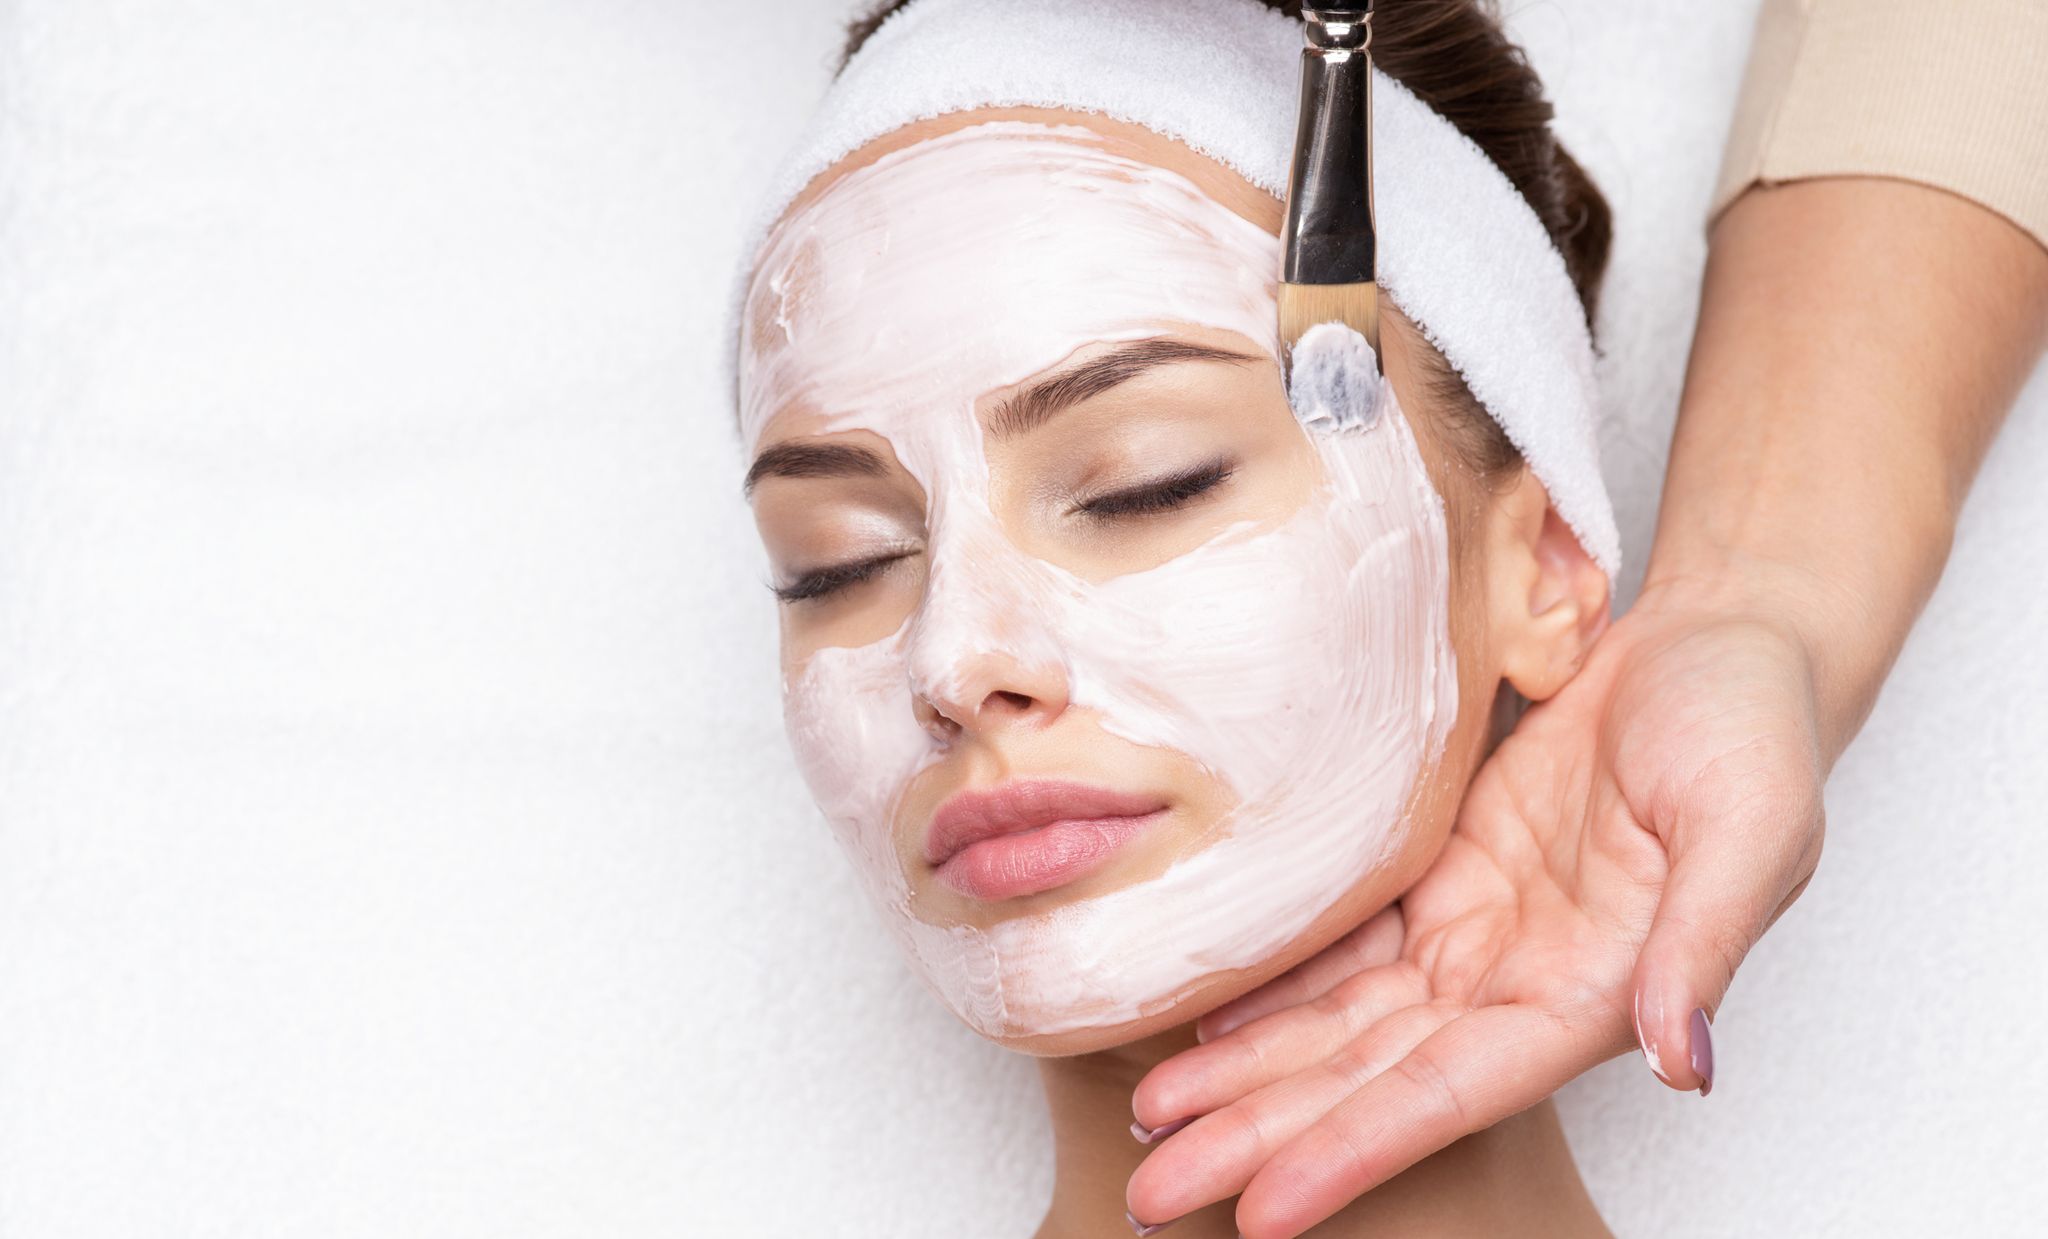 woman-receiving-facial-mask-at-beauty-salon - medical facial - resized